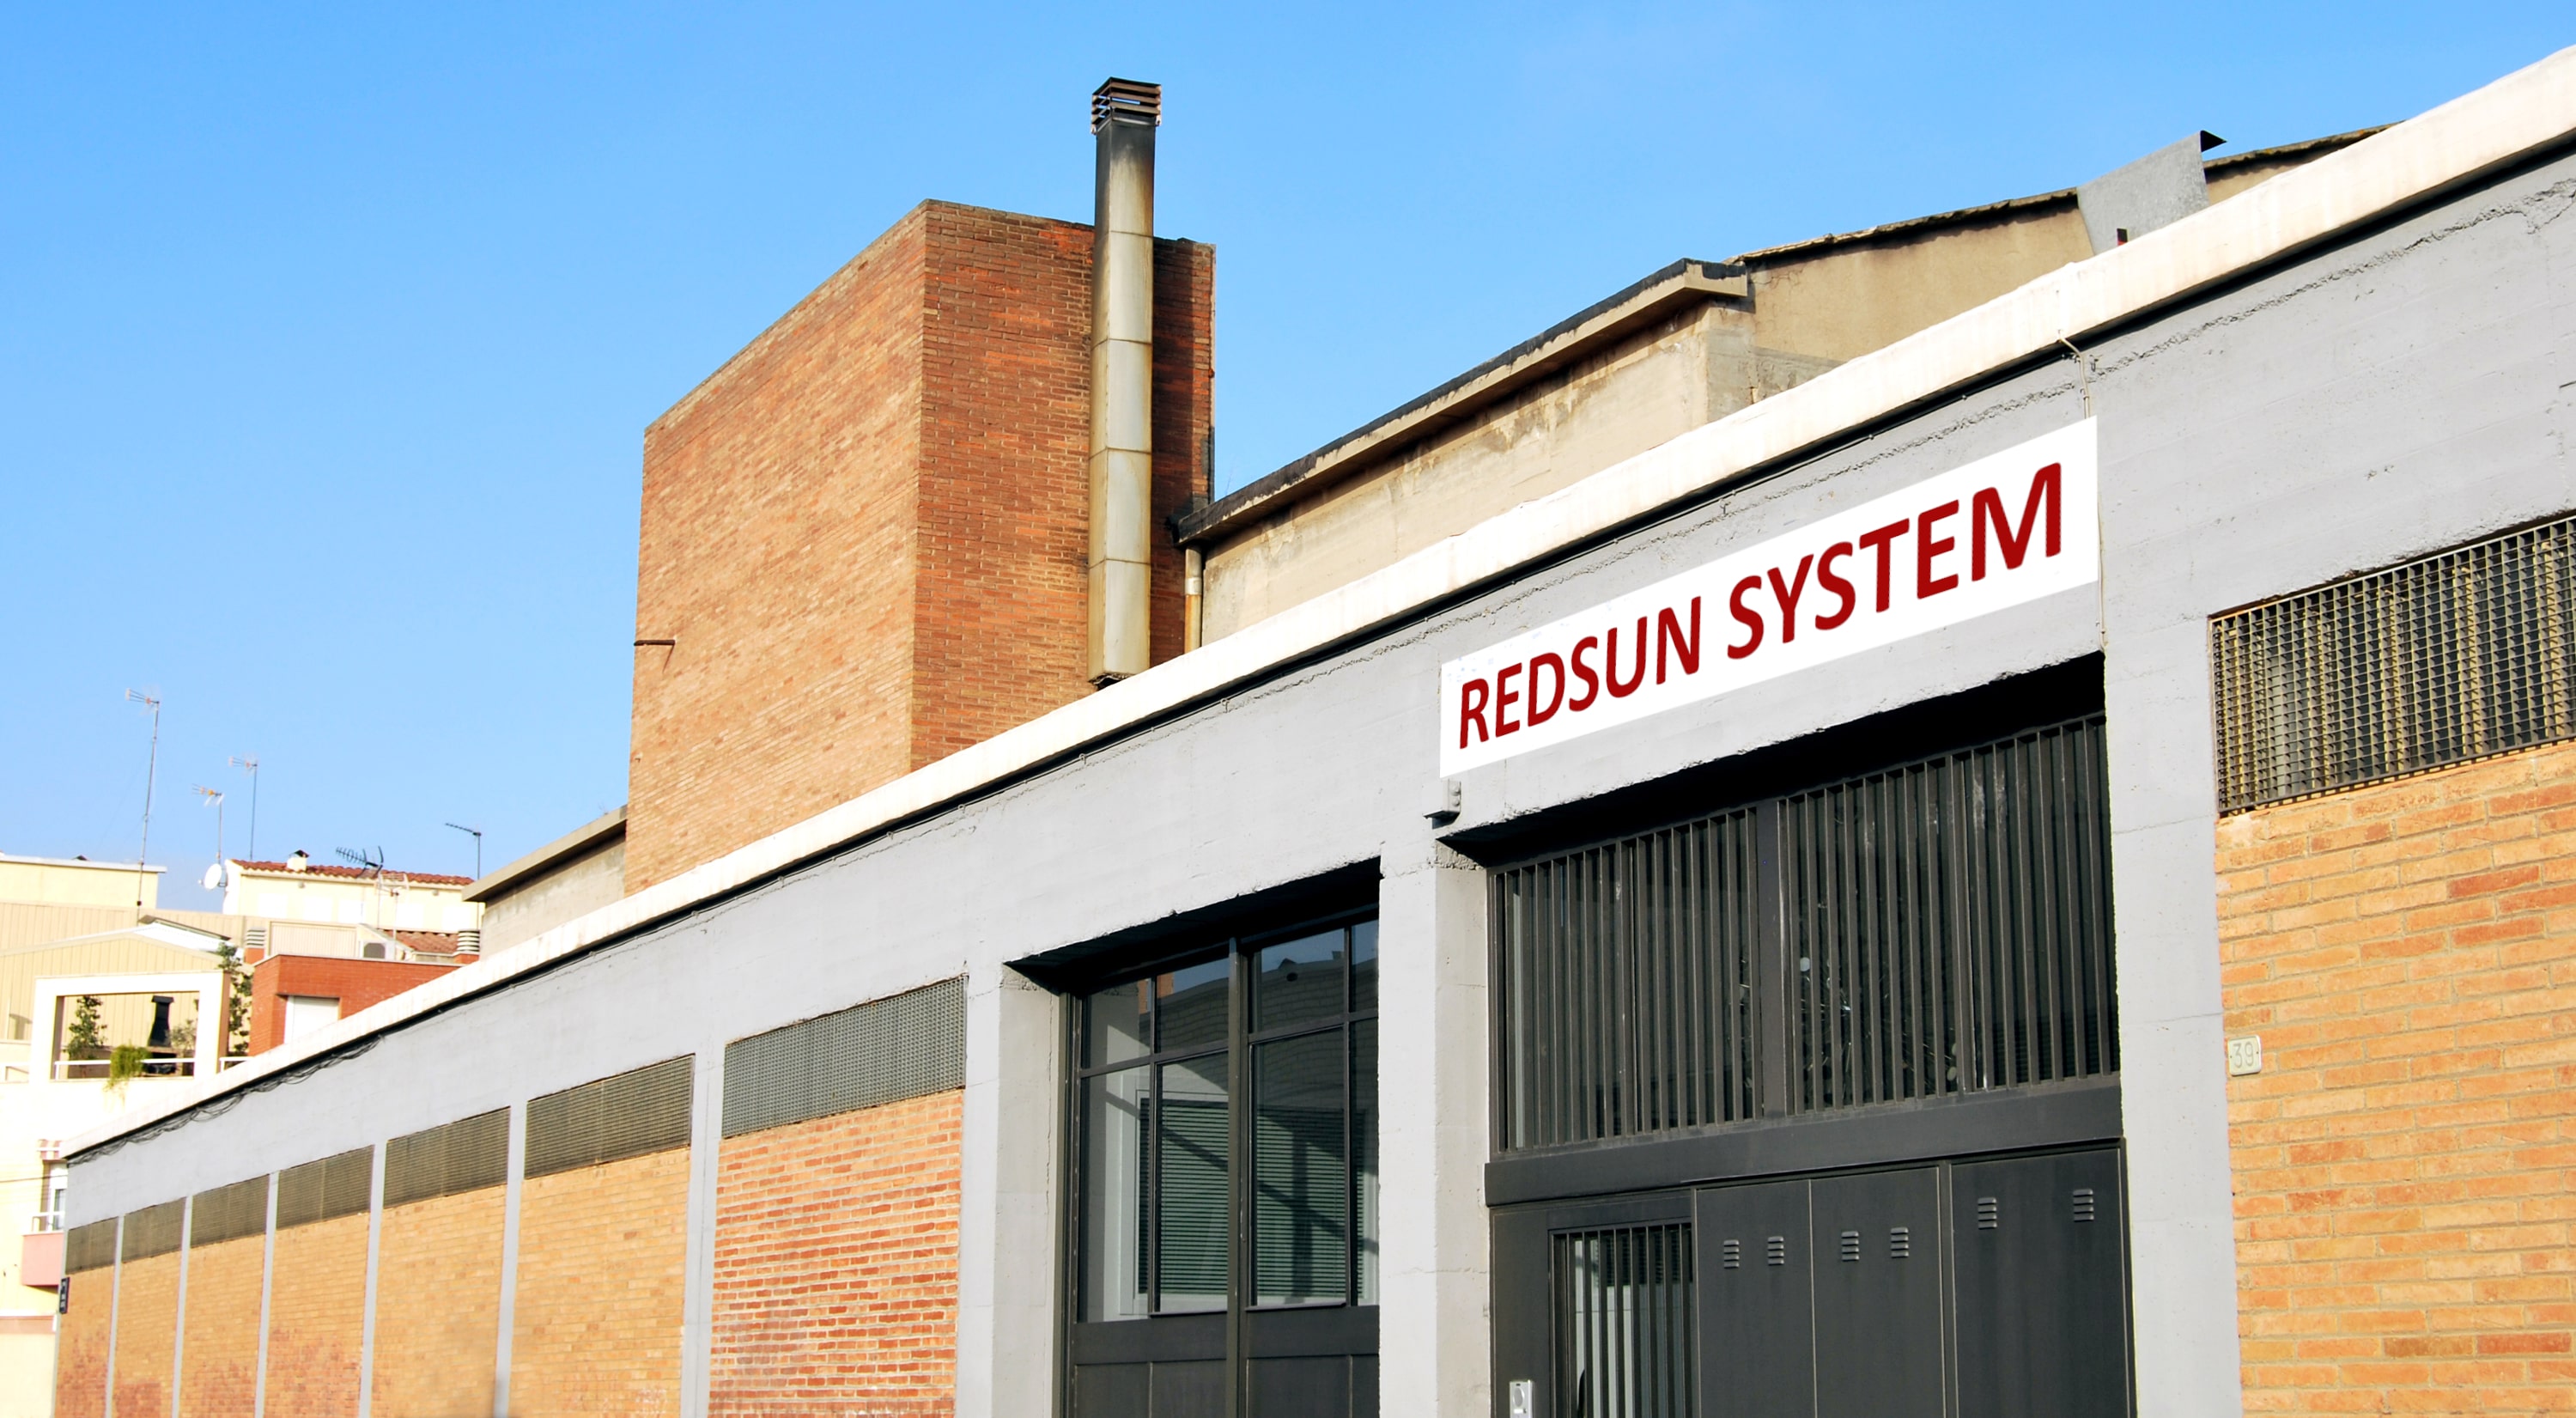 REDSUN SYSTEM